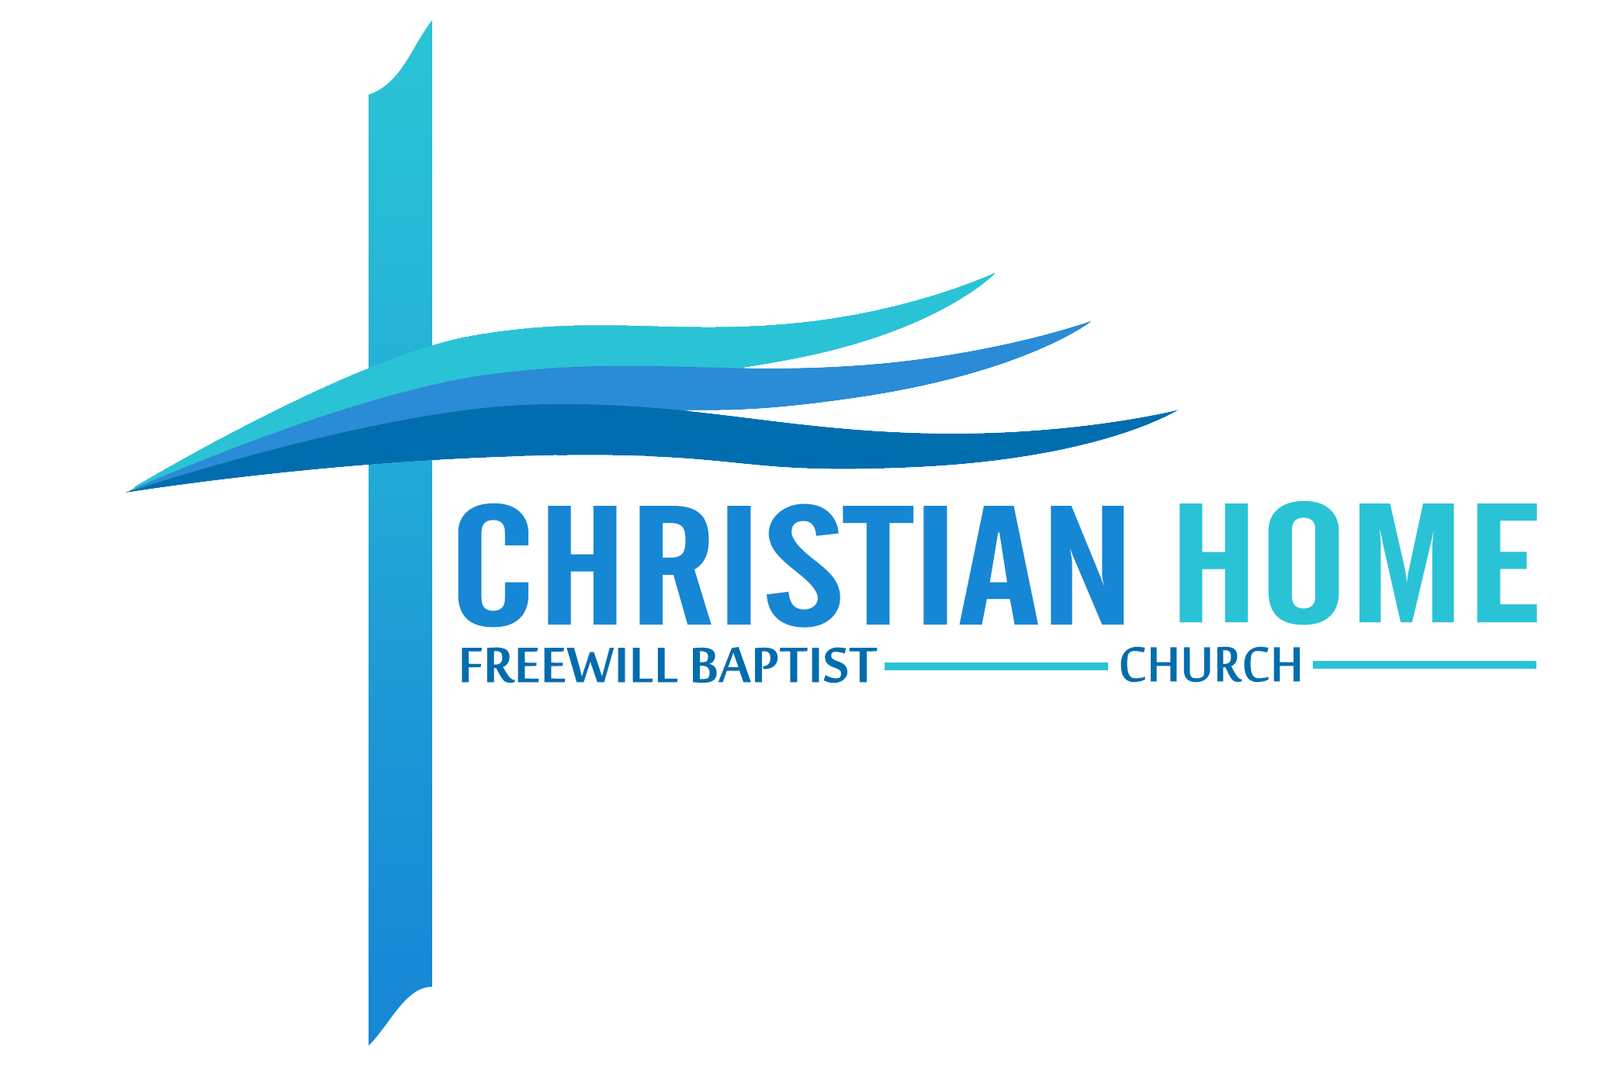 Christian Home Freewill Baptist Church Logo By Rotcav On Deviantart